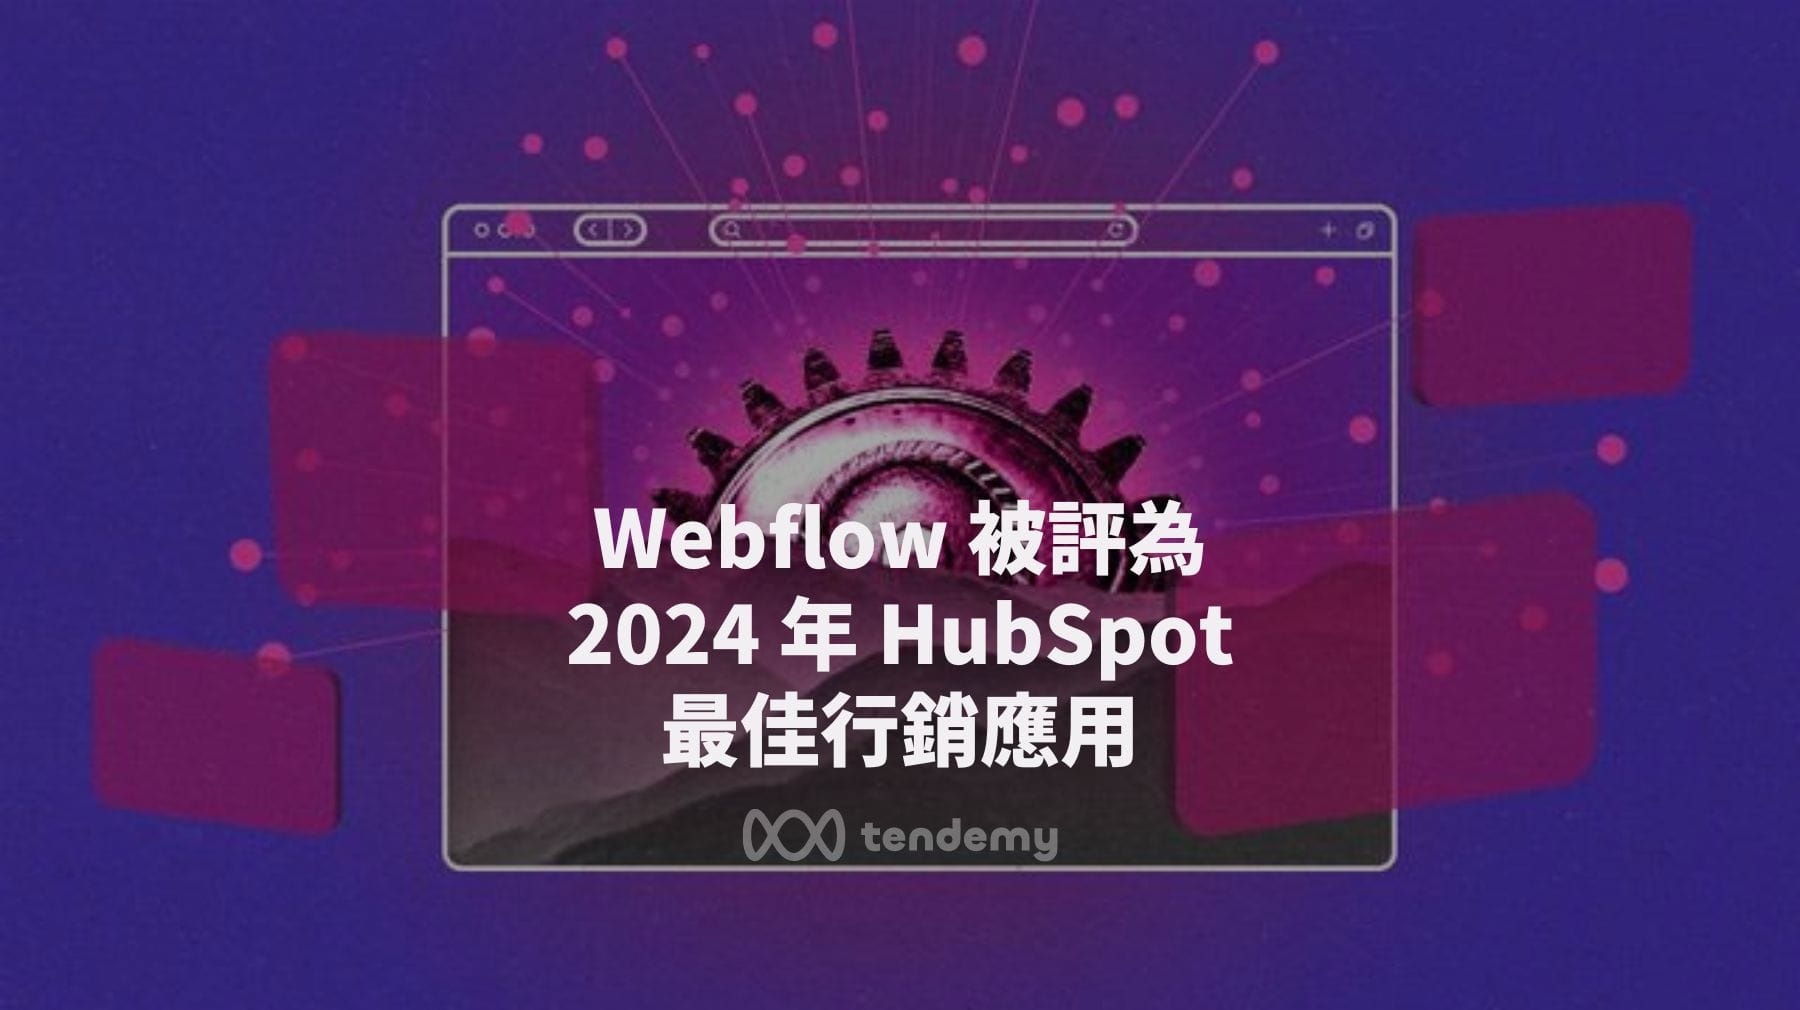 Webflow 被評為 2024 年 HubSpot 最佳行銷應用